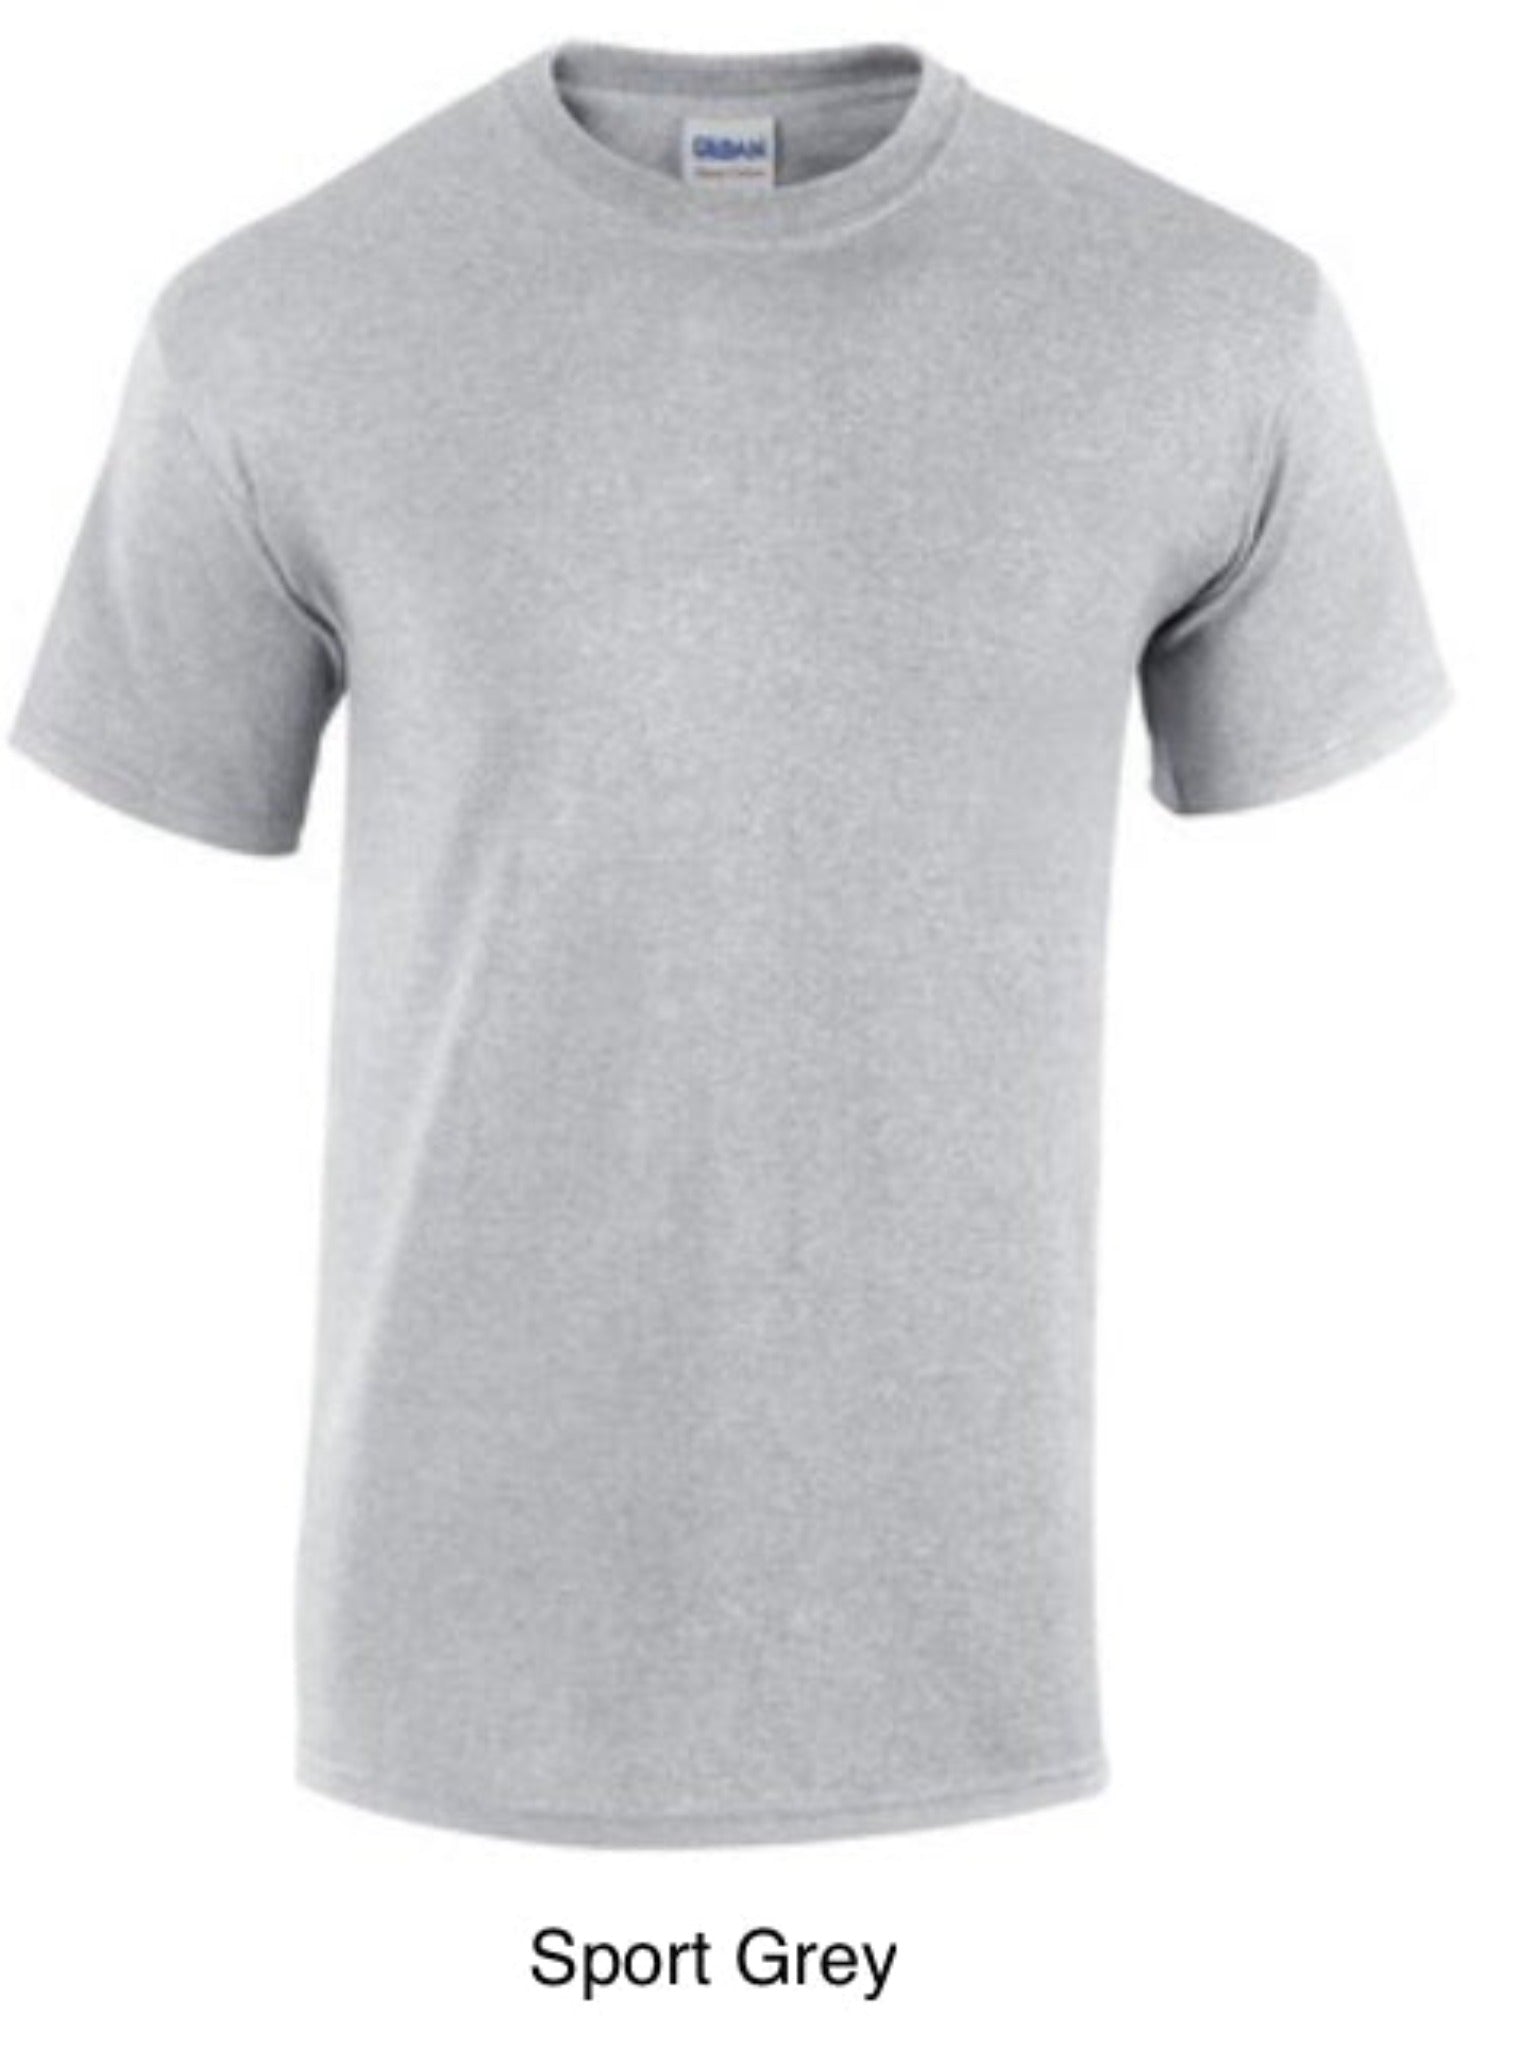 Personalized Custom Adult Shirt/Tank top